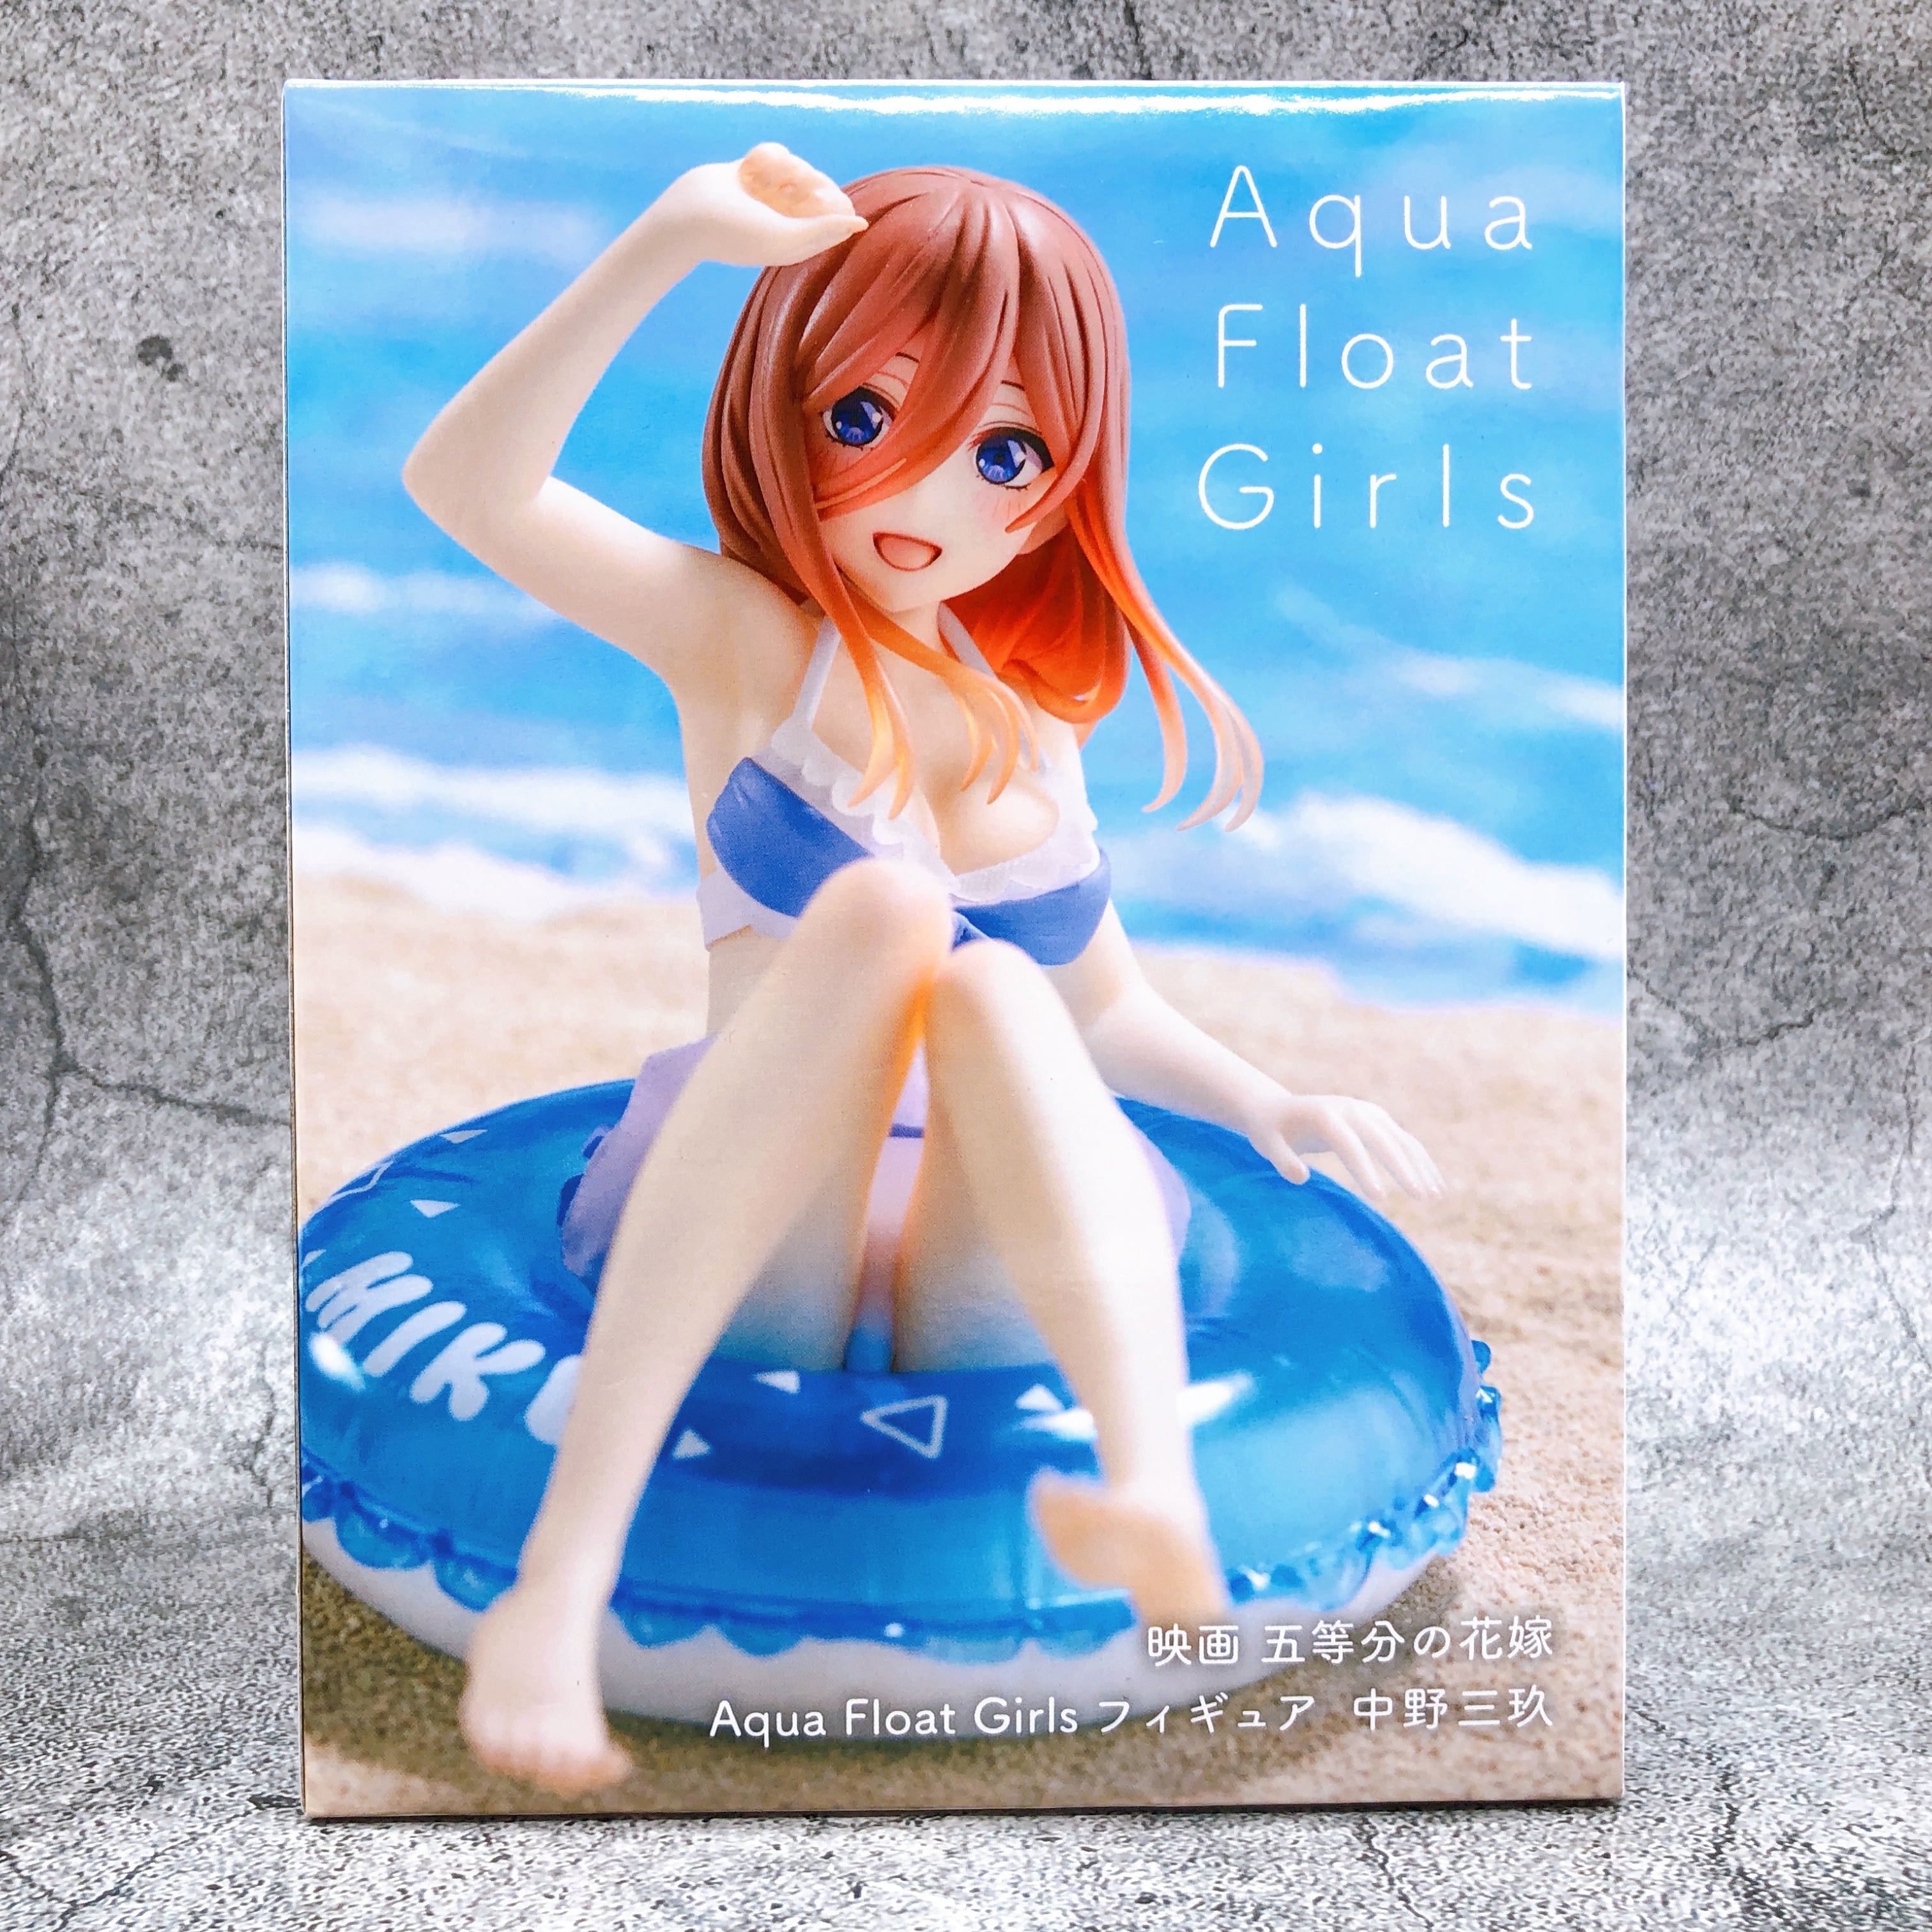 The Quintessential Quintuplets Movie Miku Nakano Aqua Float GirlsFigur